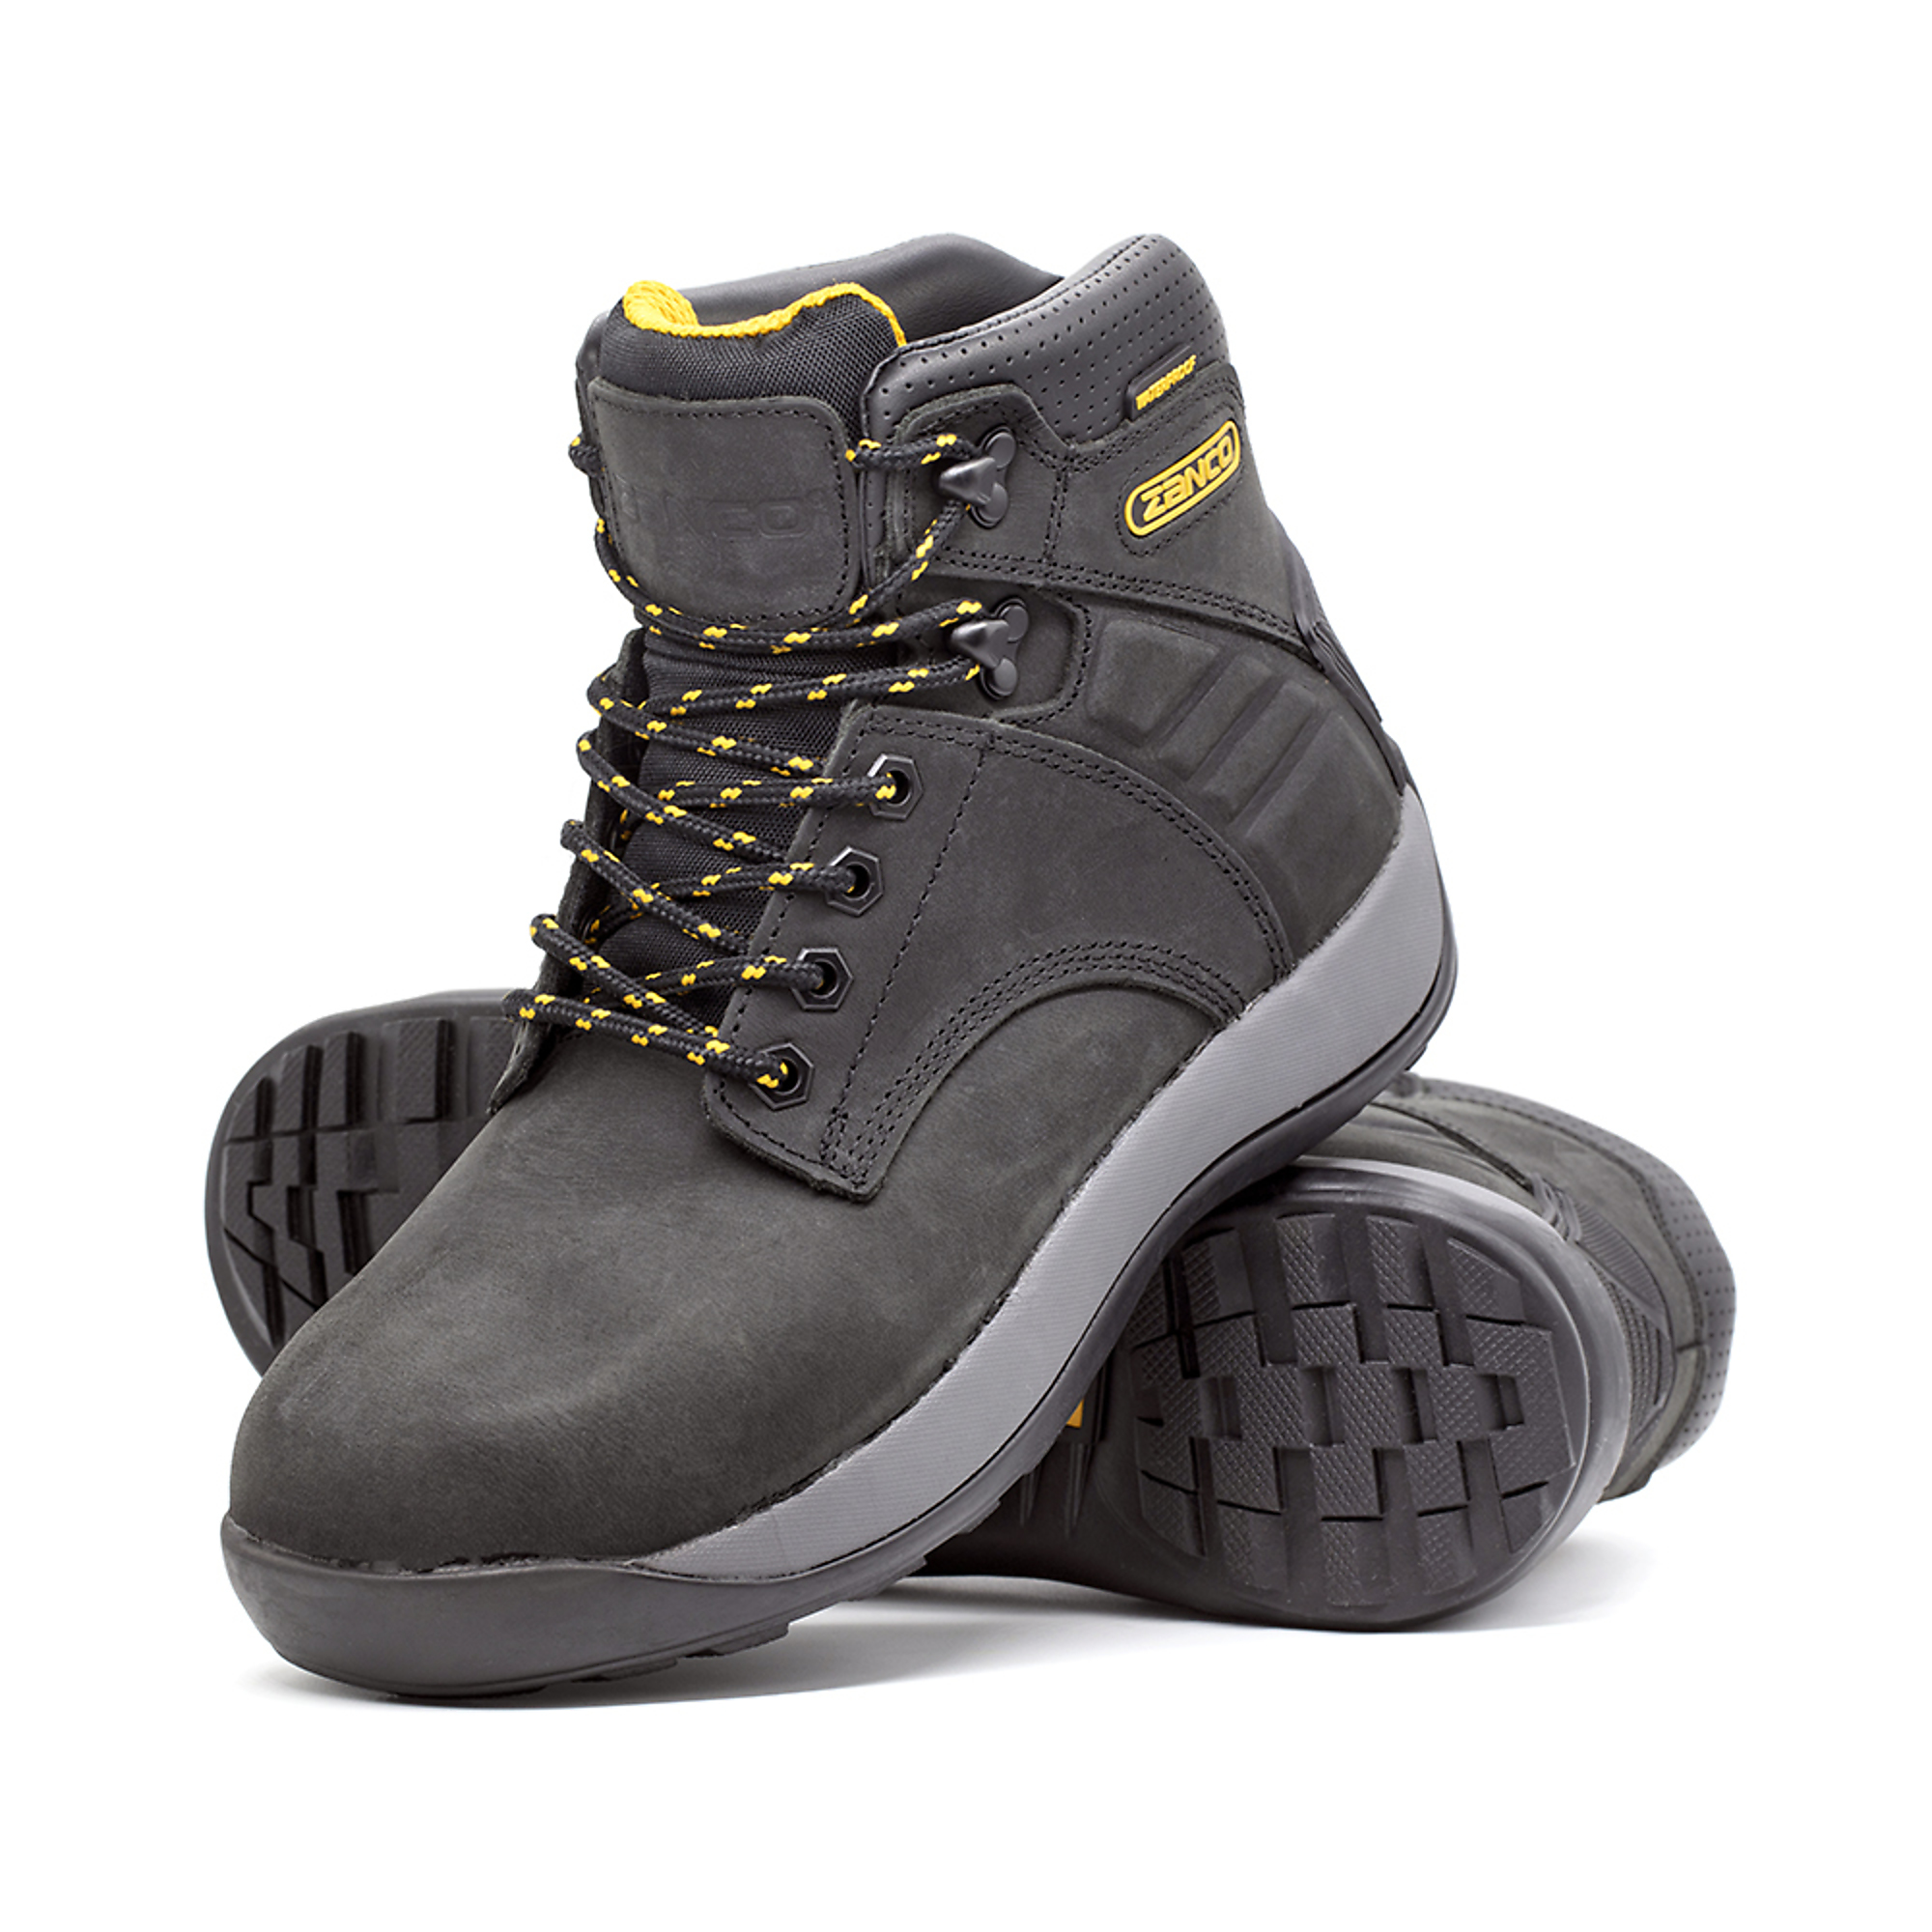 Zanco, Men's Waterproof,Steel toe,EH,Safety boots, Size 7, Width Medium, Color BLACK, Model 8236-01-7